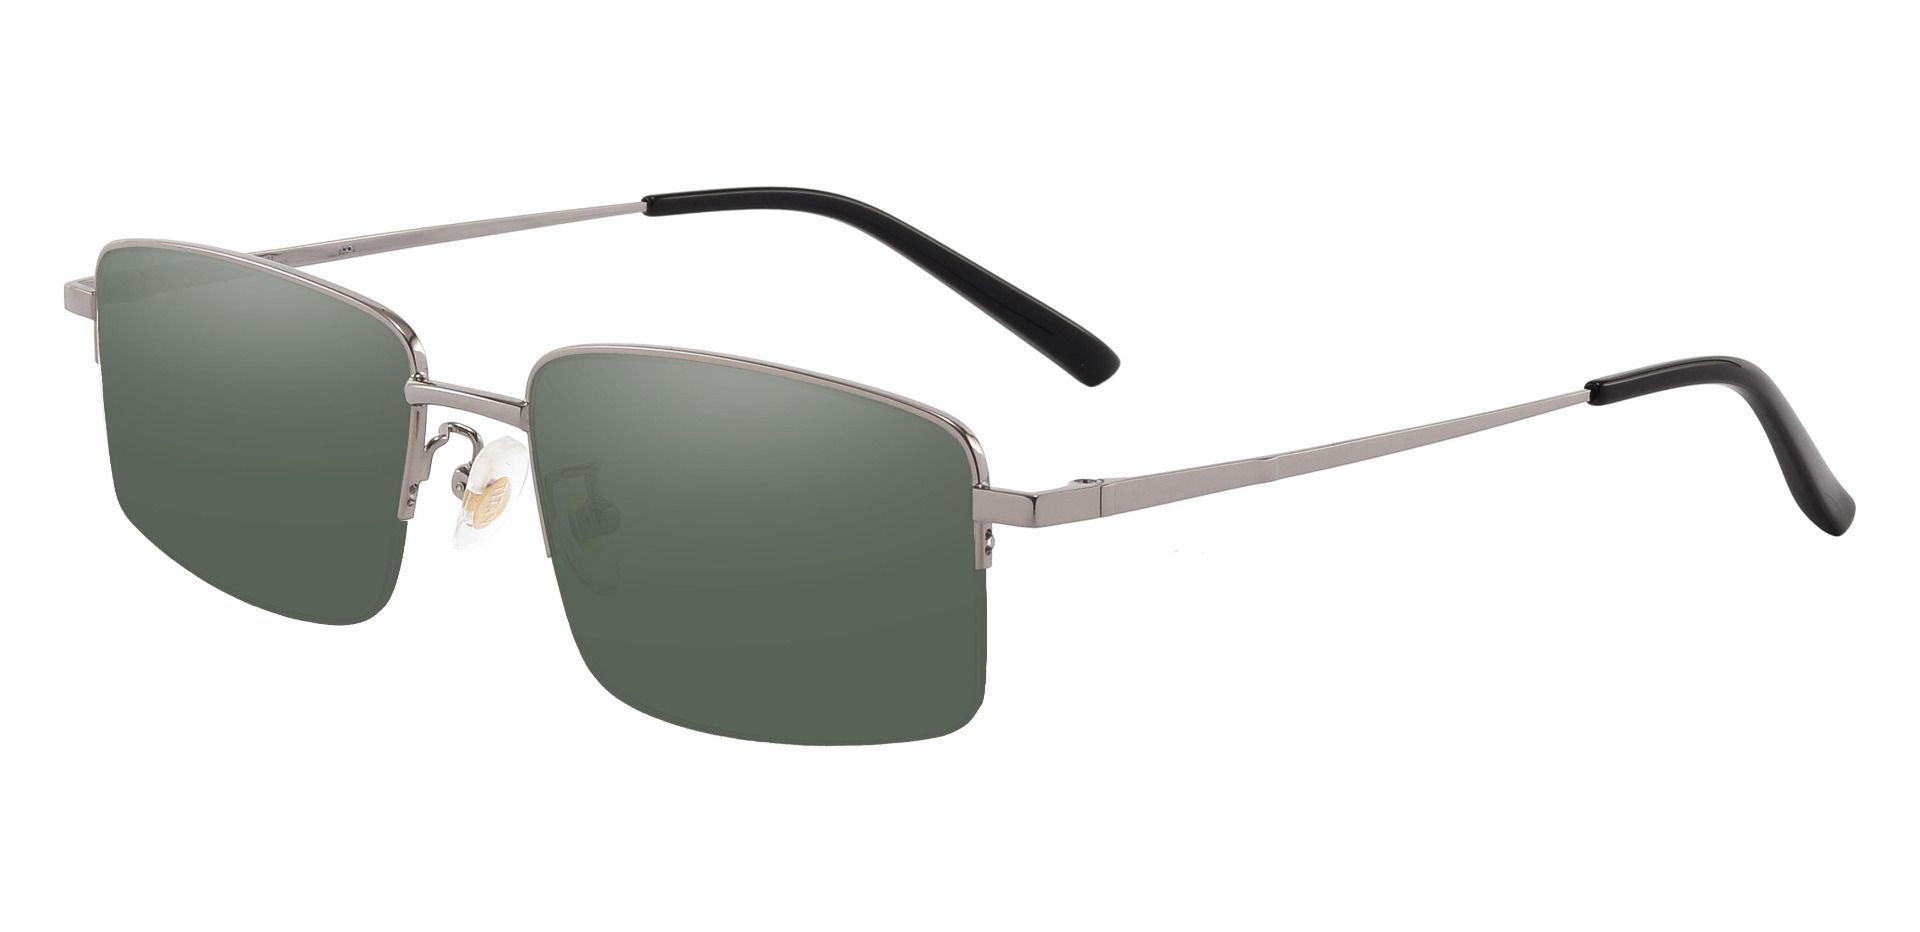 Wayne Rectangle Non-Rx Sunglasses - Gray Frame With Green Lenses